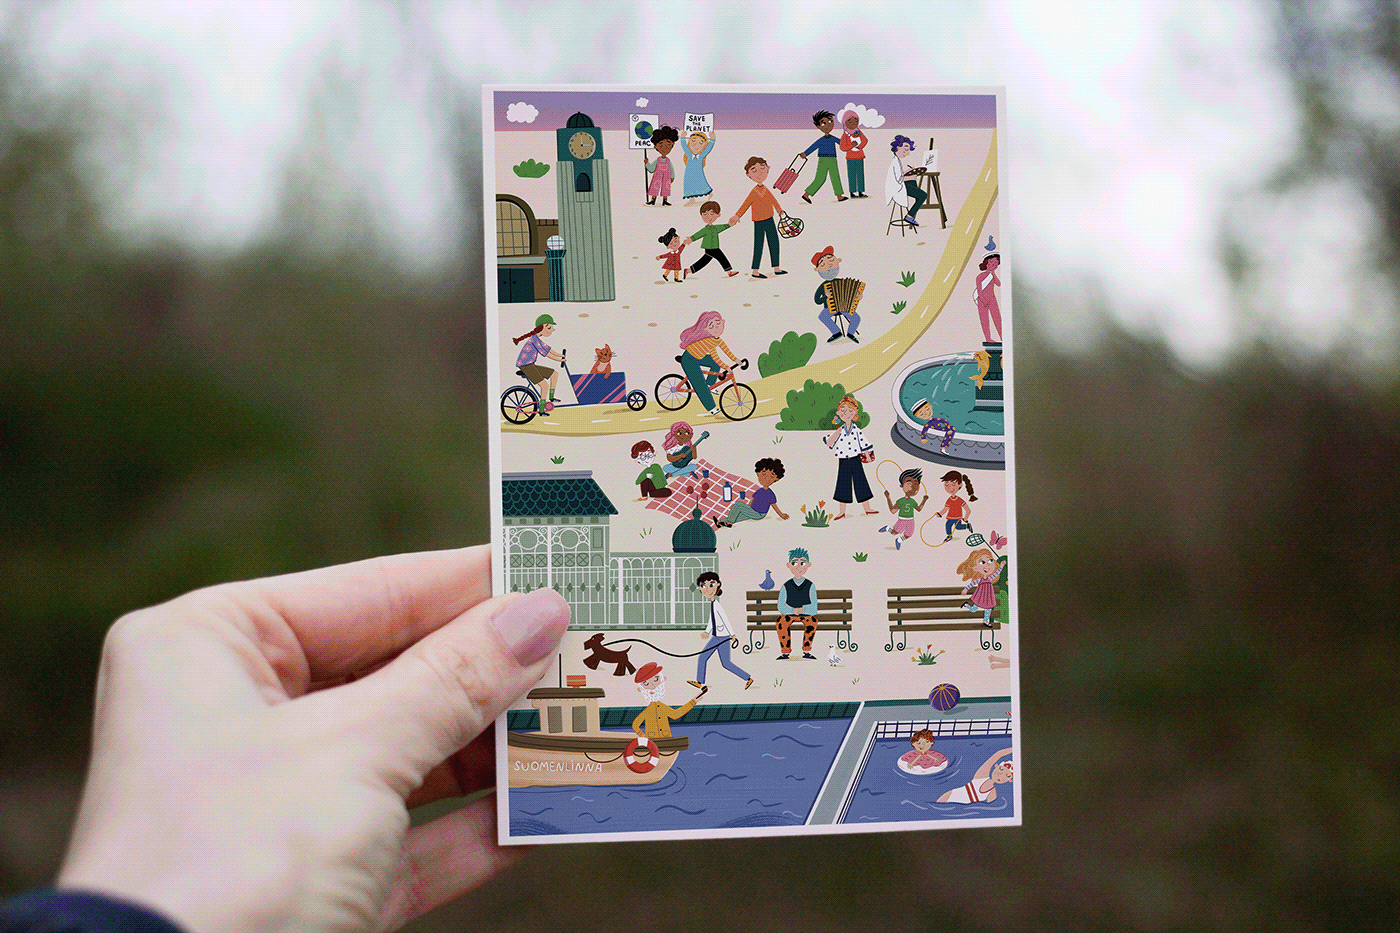 Wimmelbuch children's book children illustration Character design  digital illustration Procreate Illustrator postcard poster